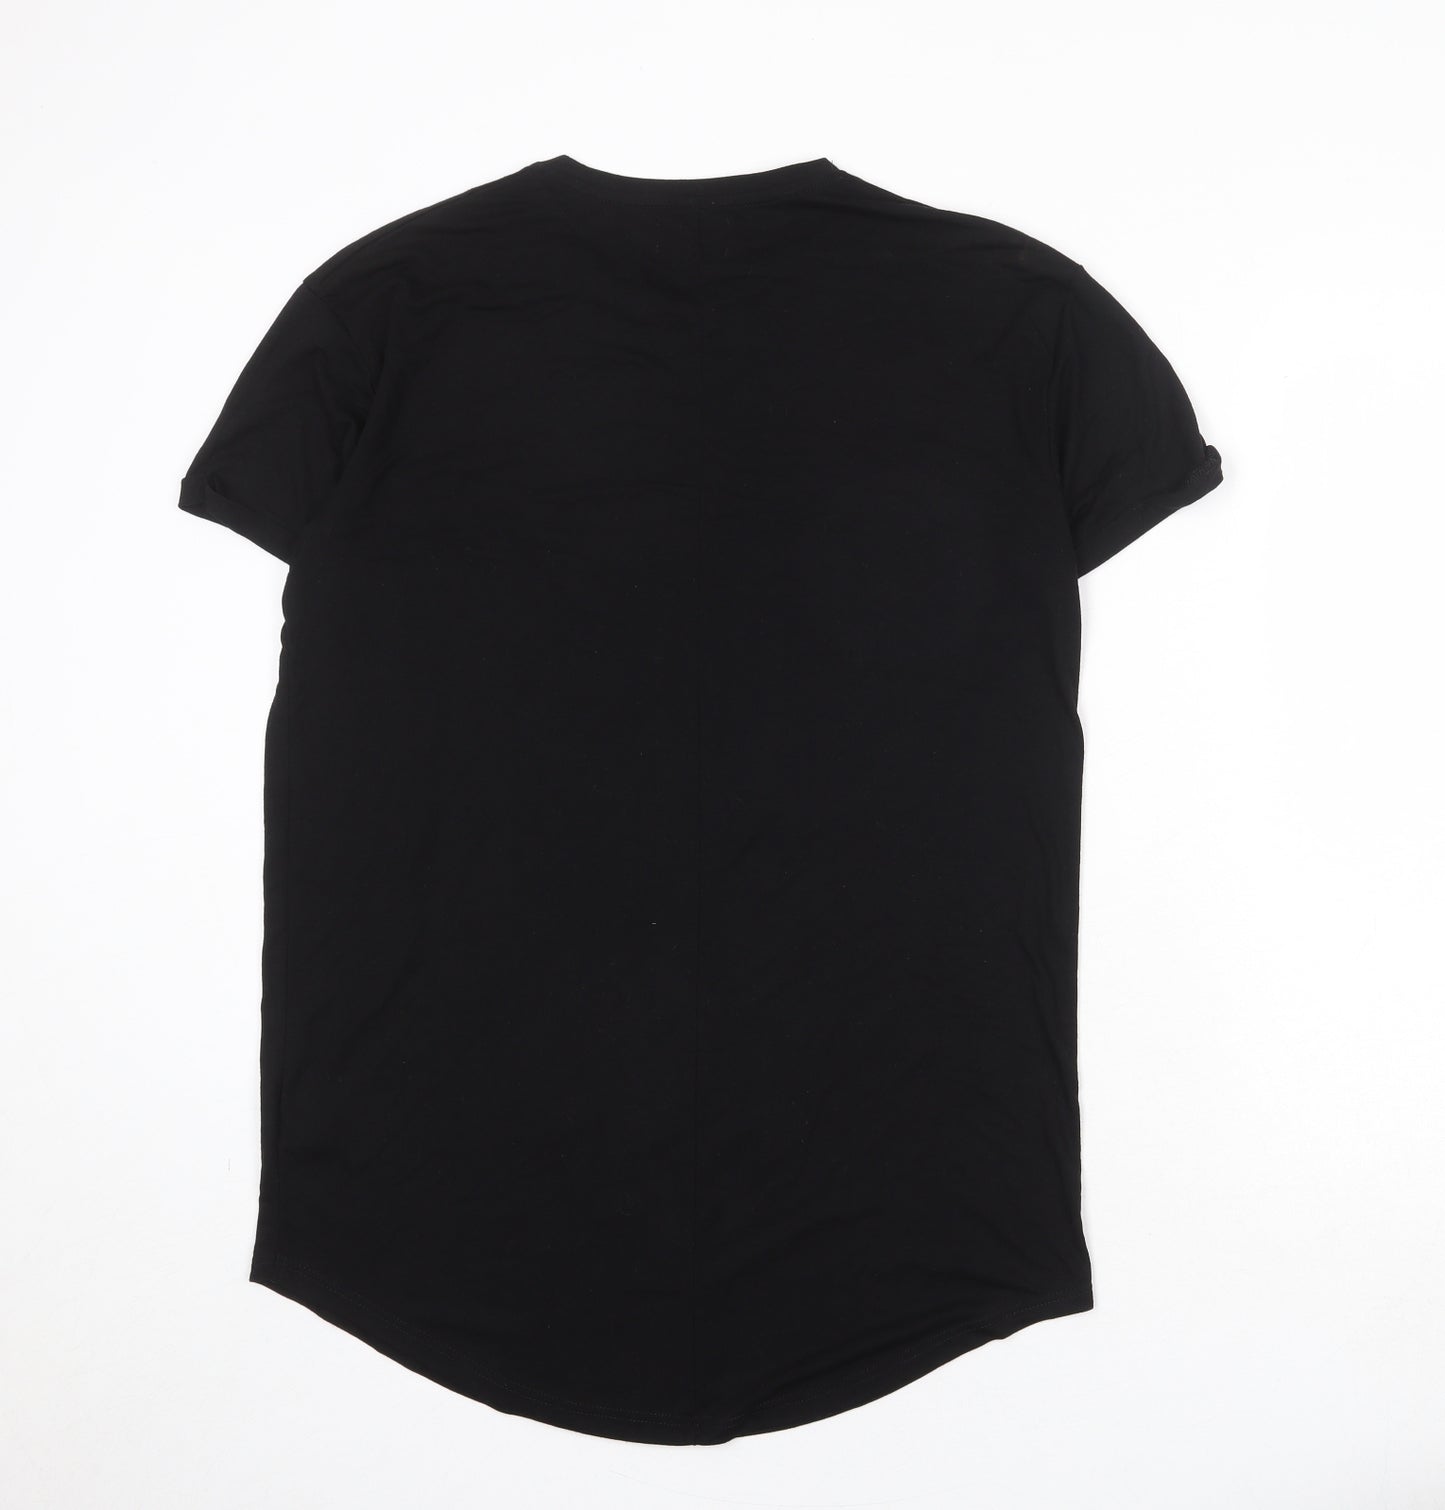 Topman Mens Black Viscose T-Shirt Size M Round Neck